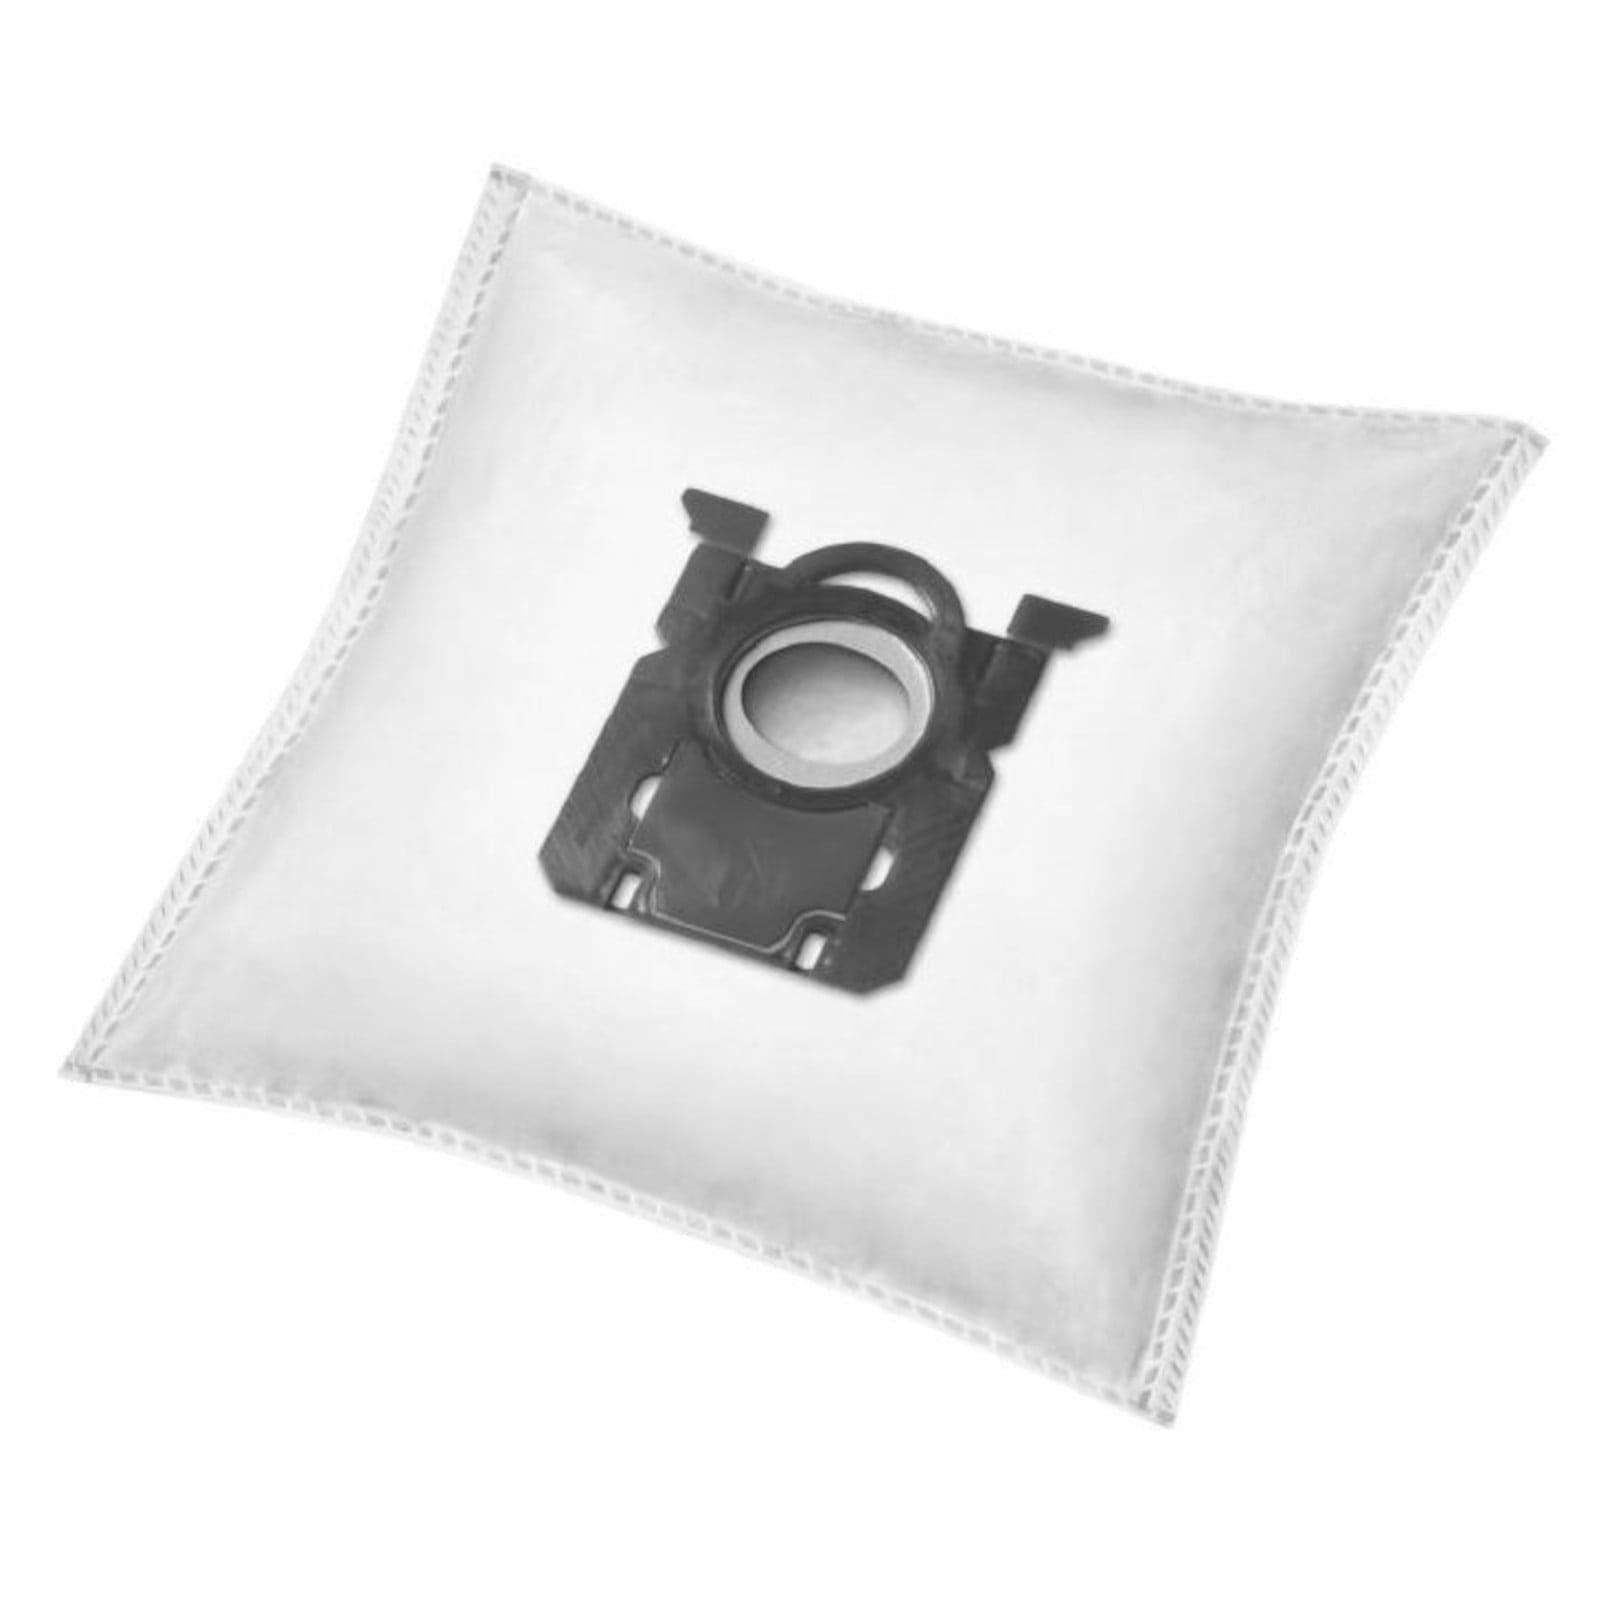 Reinica Staubsaugerbeutel passend Staubbeutel für Saugerbeutel 10er-Pack 42EB, EEG Electrolux Beutel